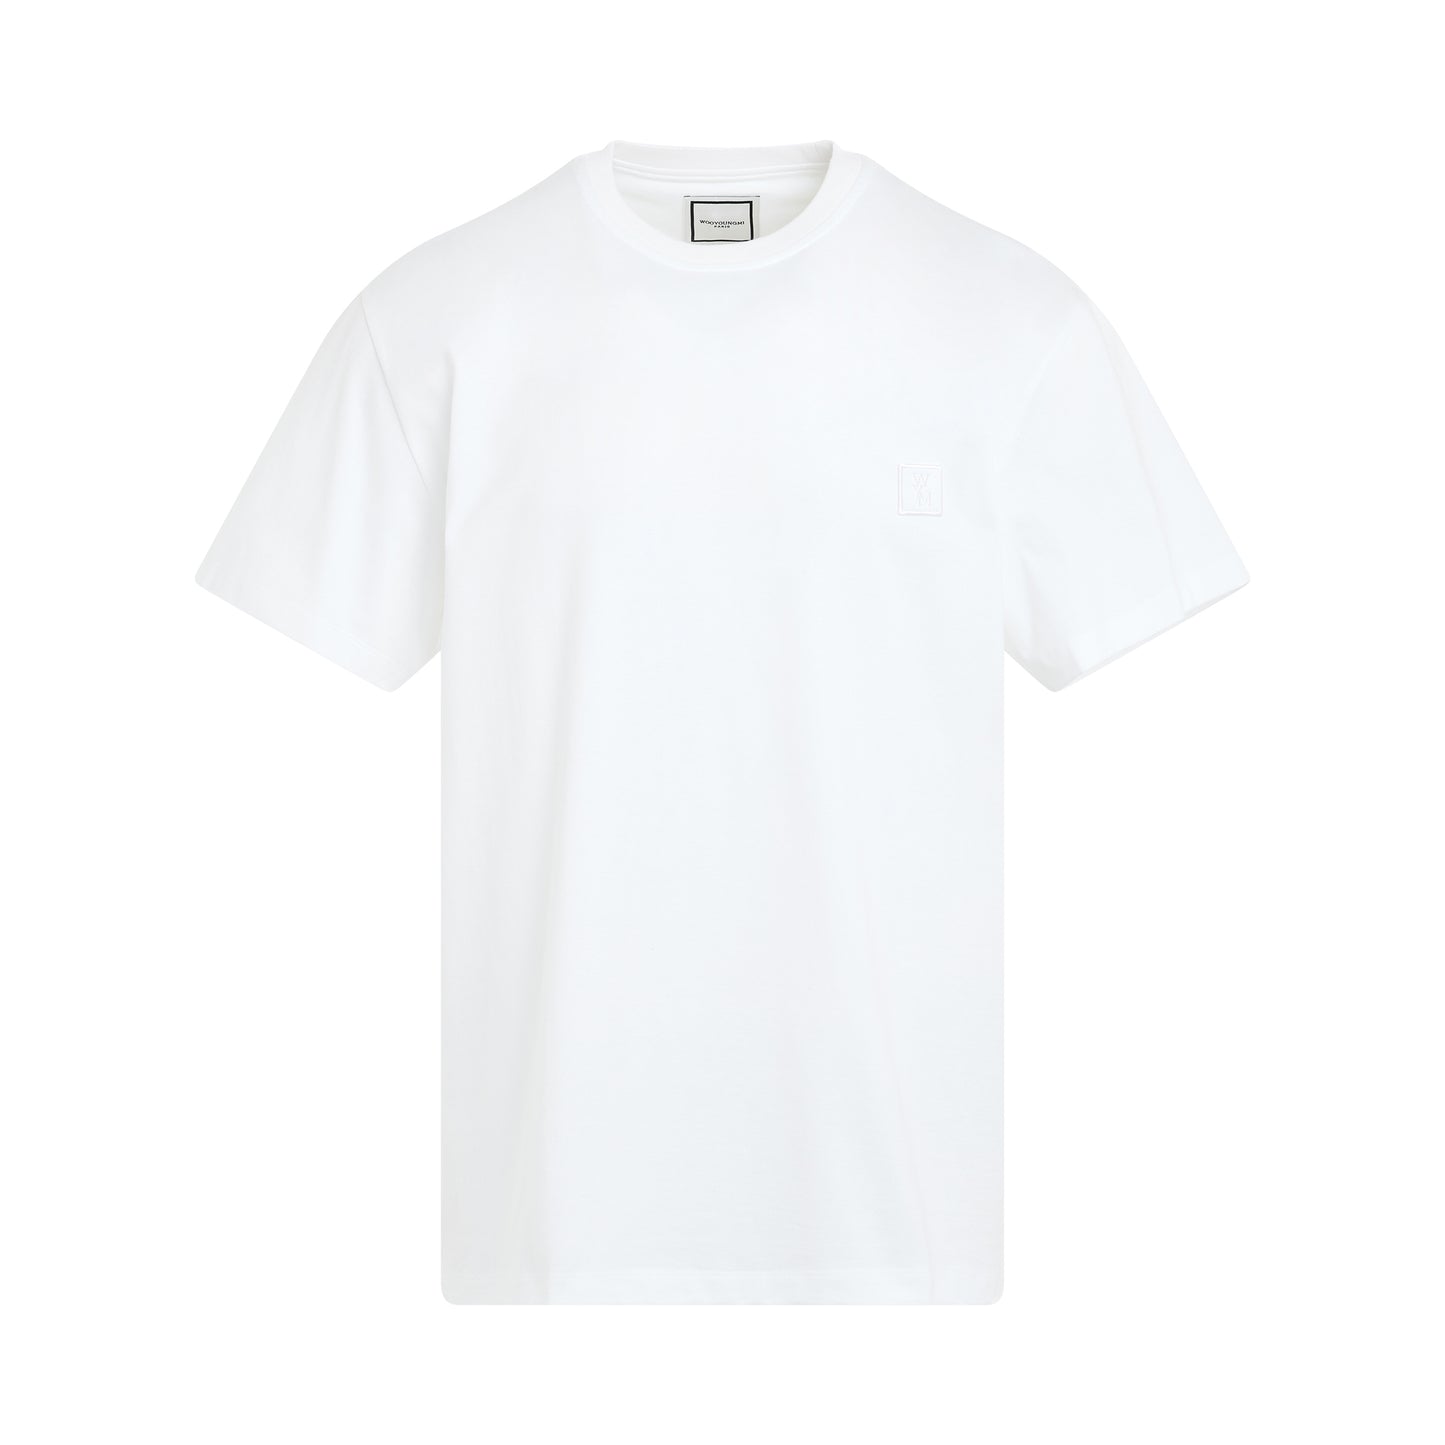 Glowing Logo T-Shirt in White